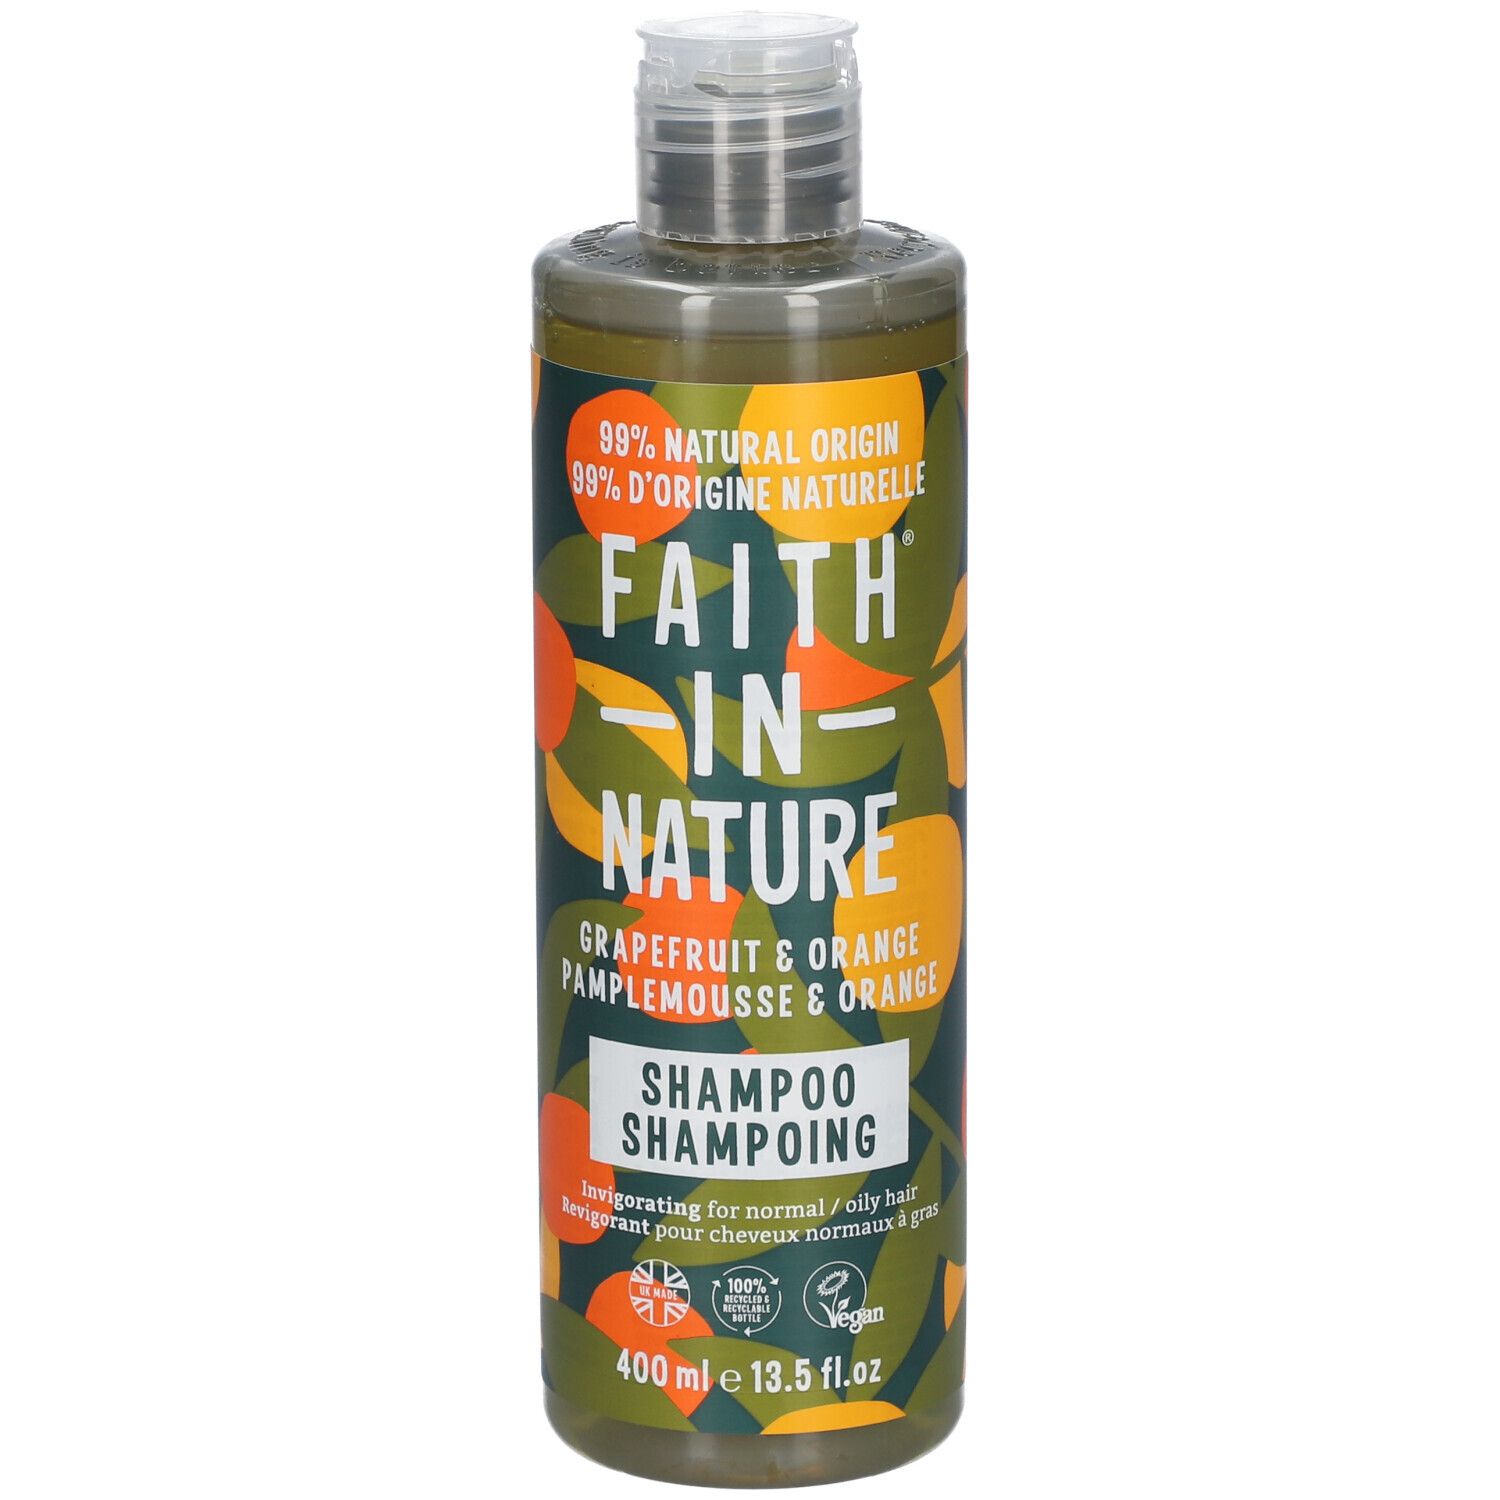 FAITH IN NATURE® Shampoo Grapefruit & Orange